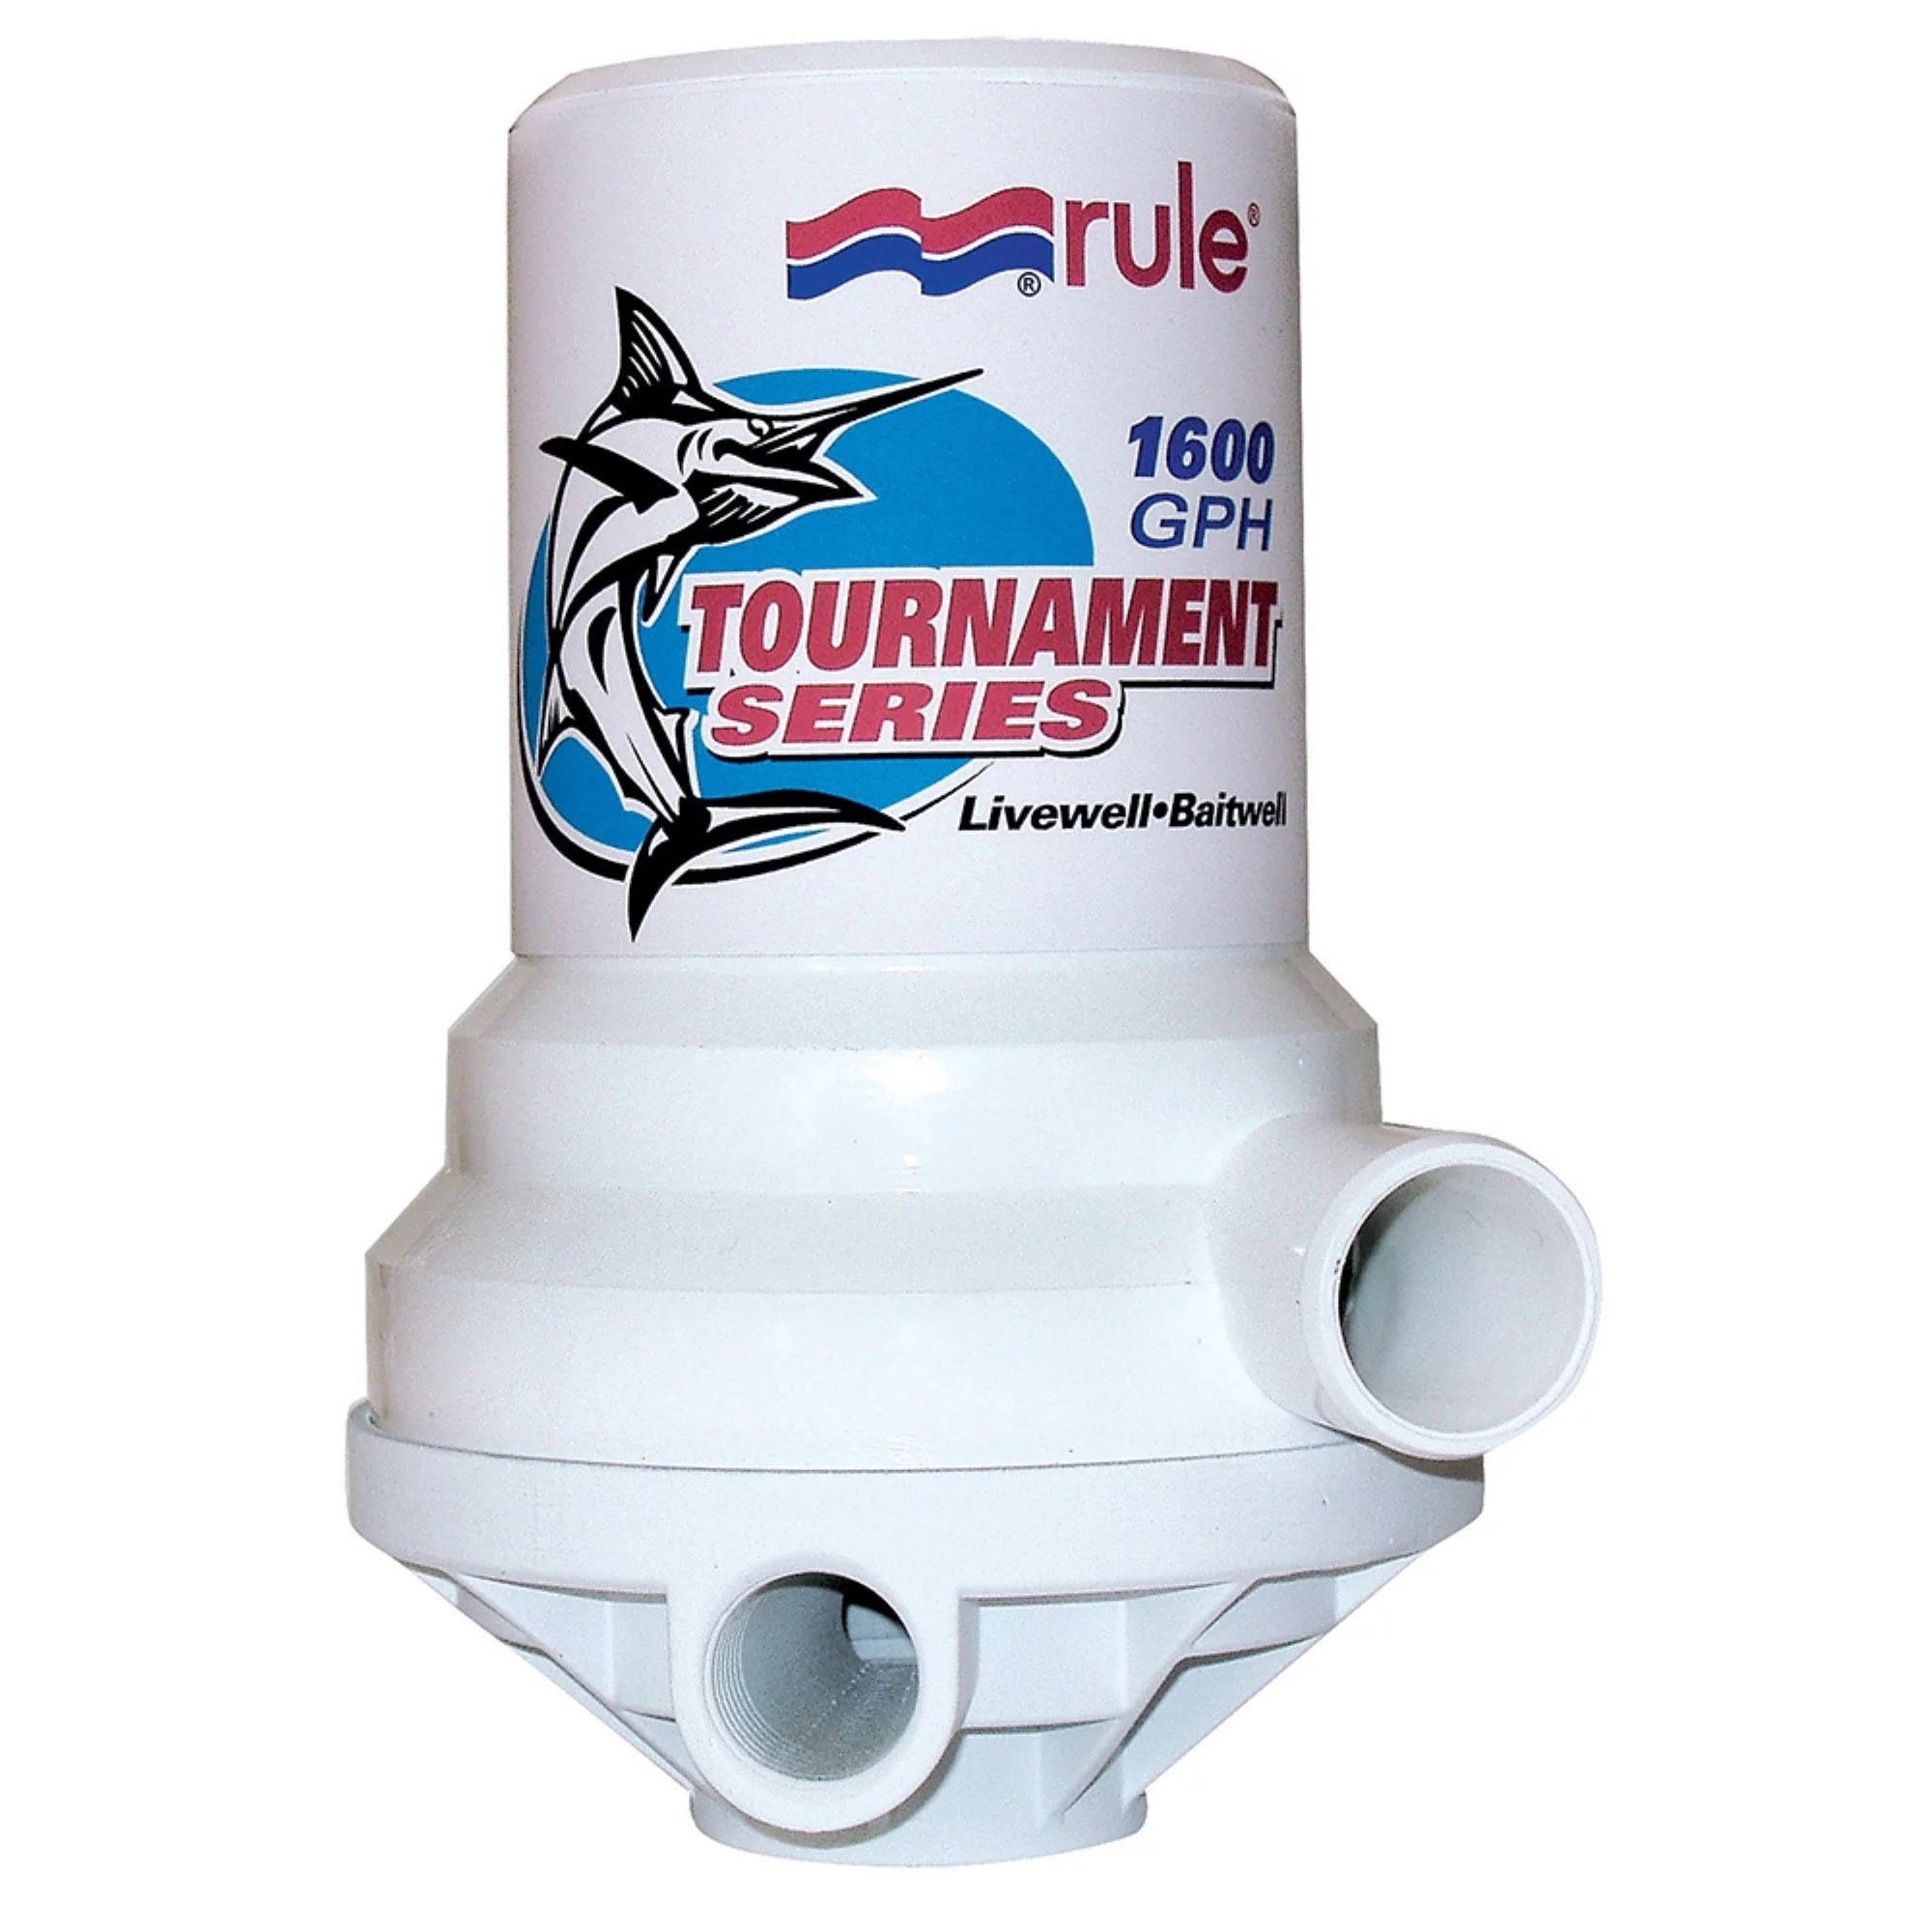 Tournament Series Livewell Pump 1600 GPH